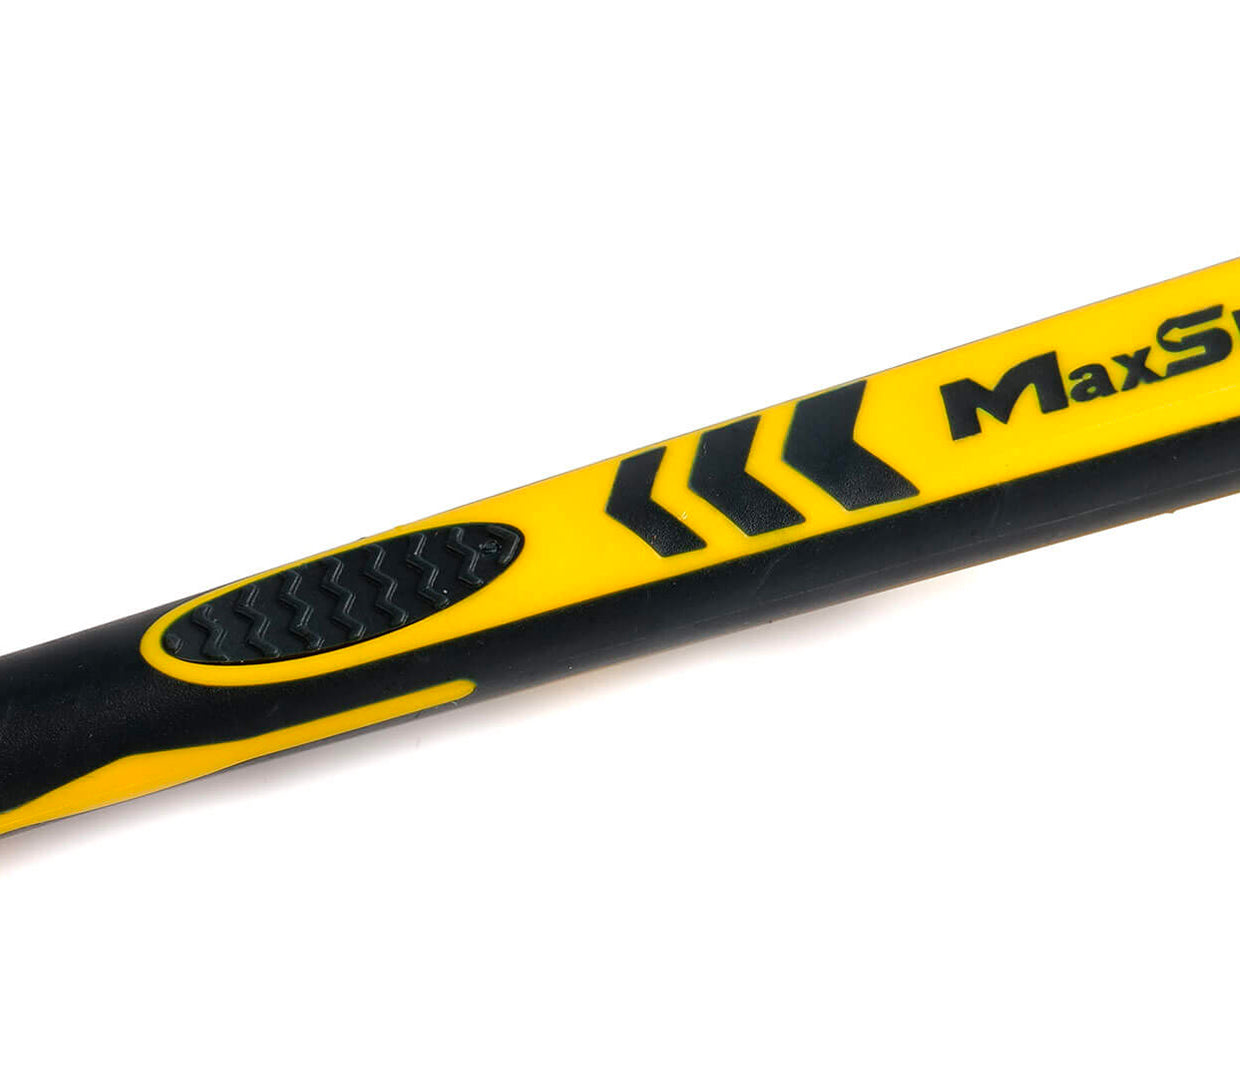 Maxshine Detailing Brush - White 12mm